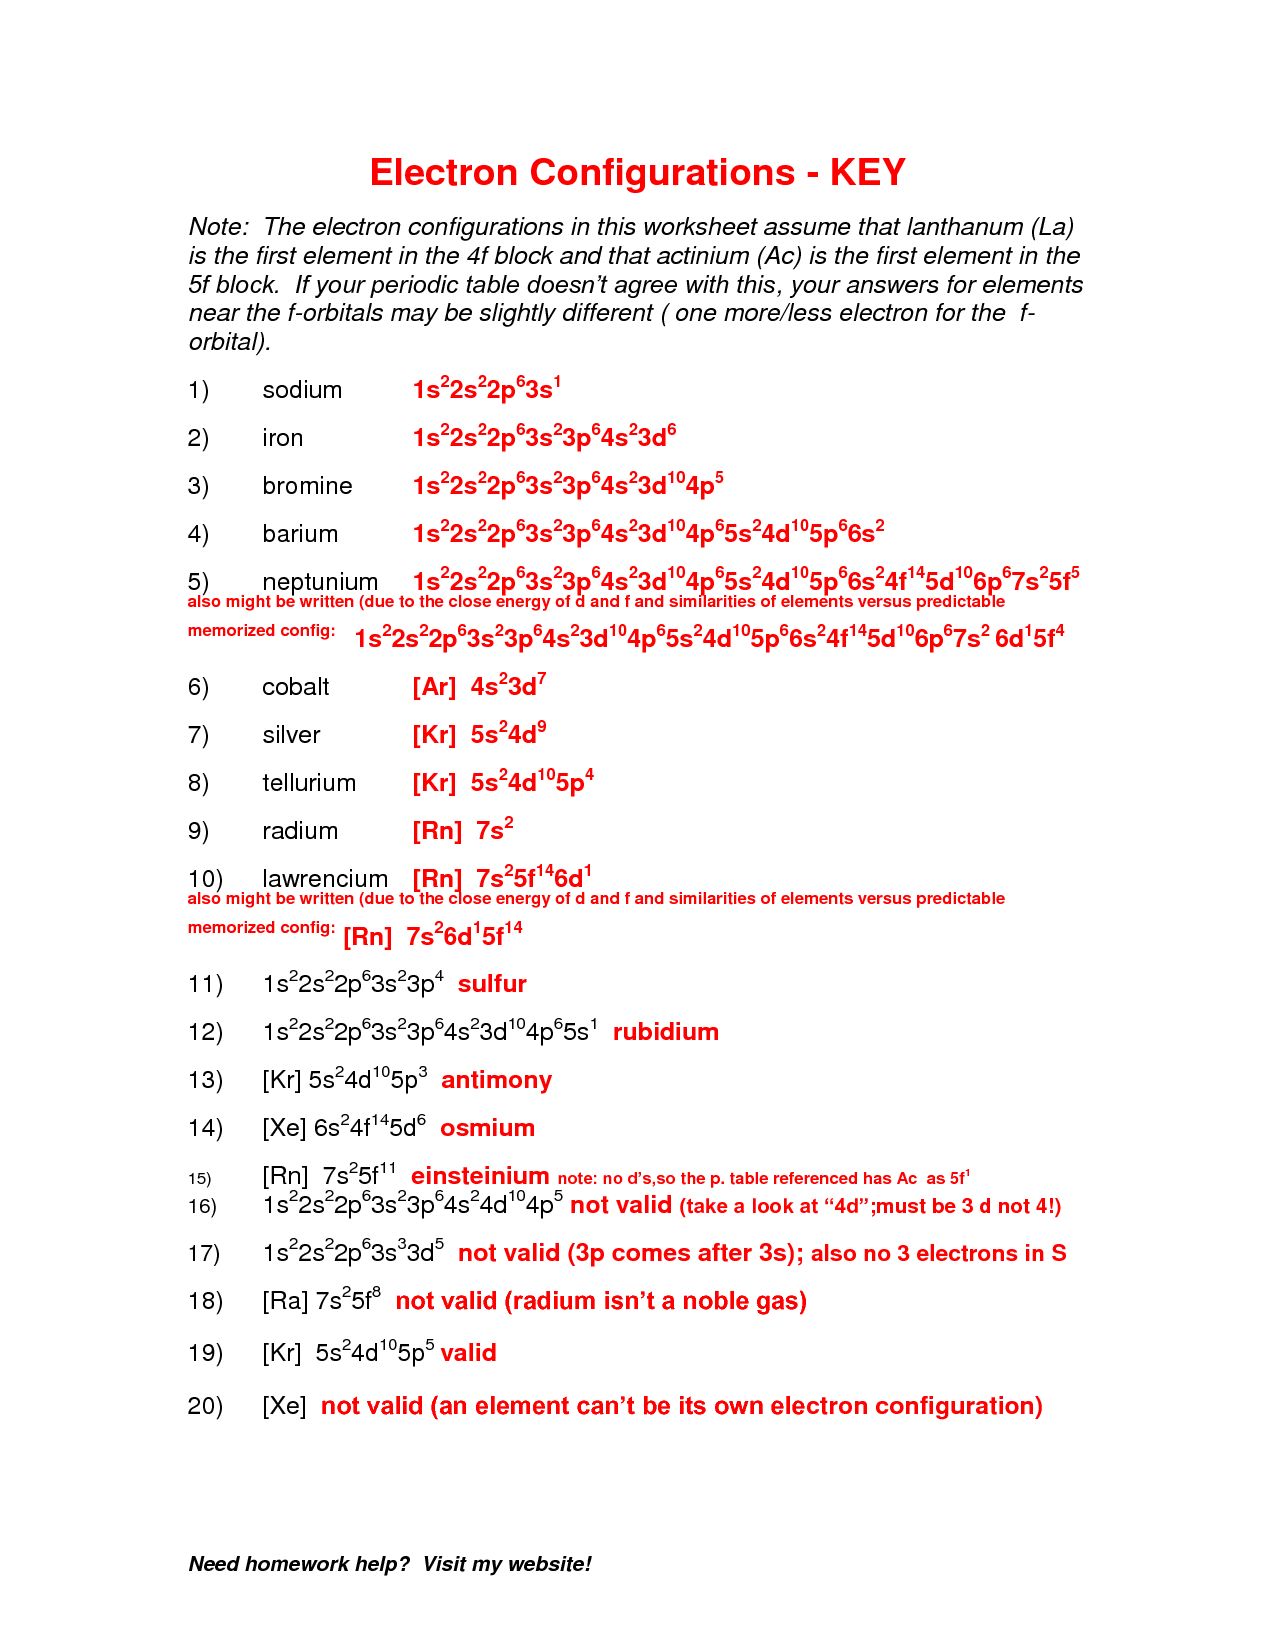 electron configuration worksheet answers pdf